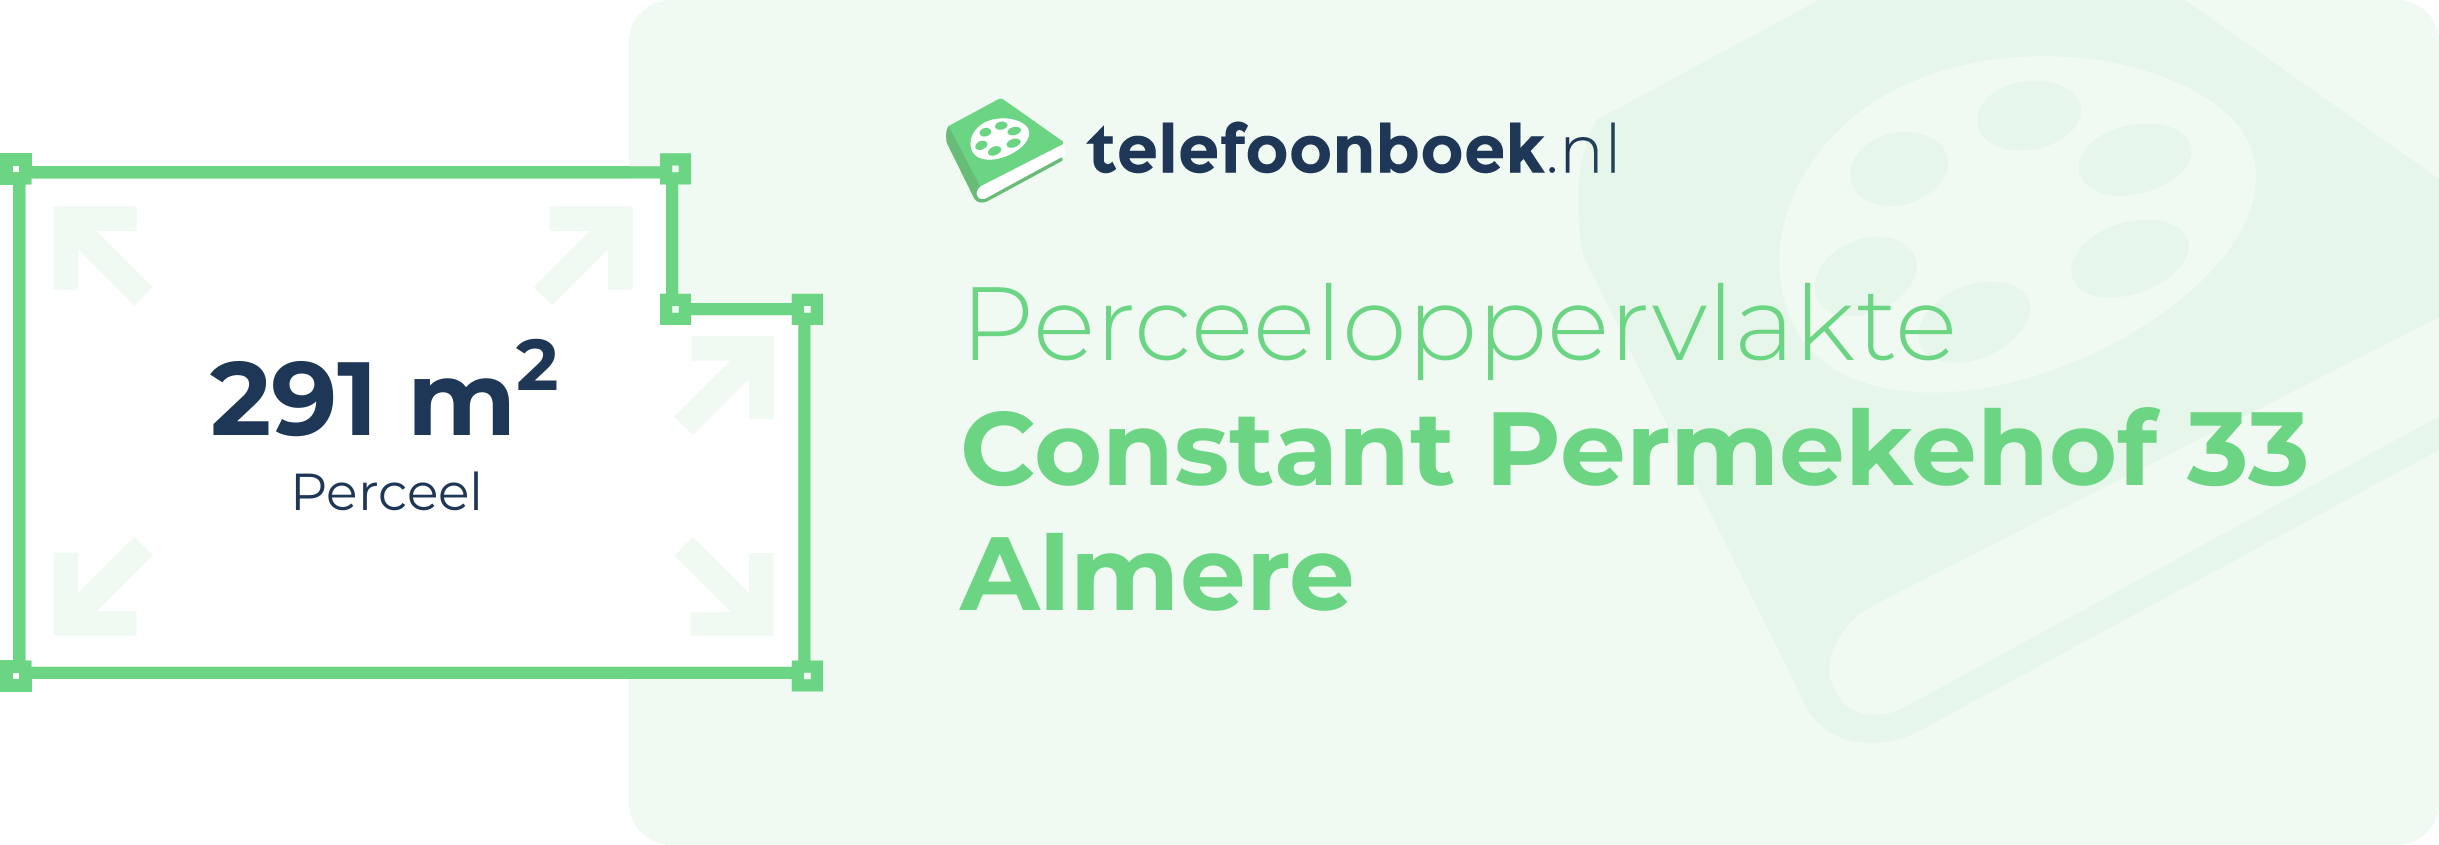 Perceeloppervlakte Constant Permekehof 33 Almere